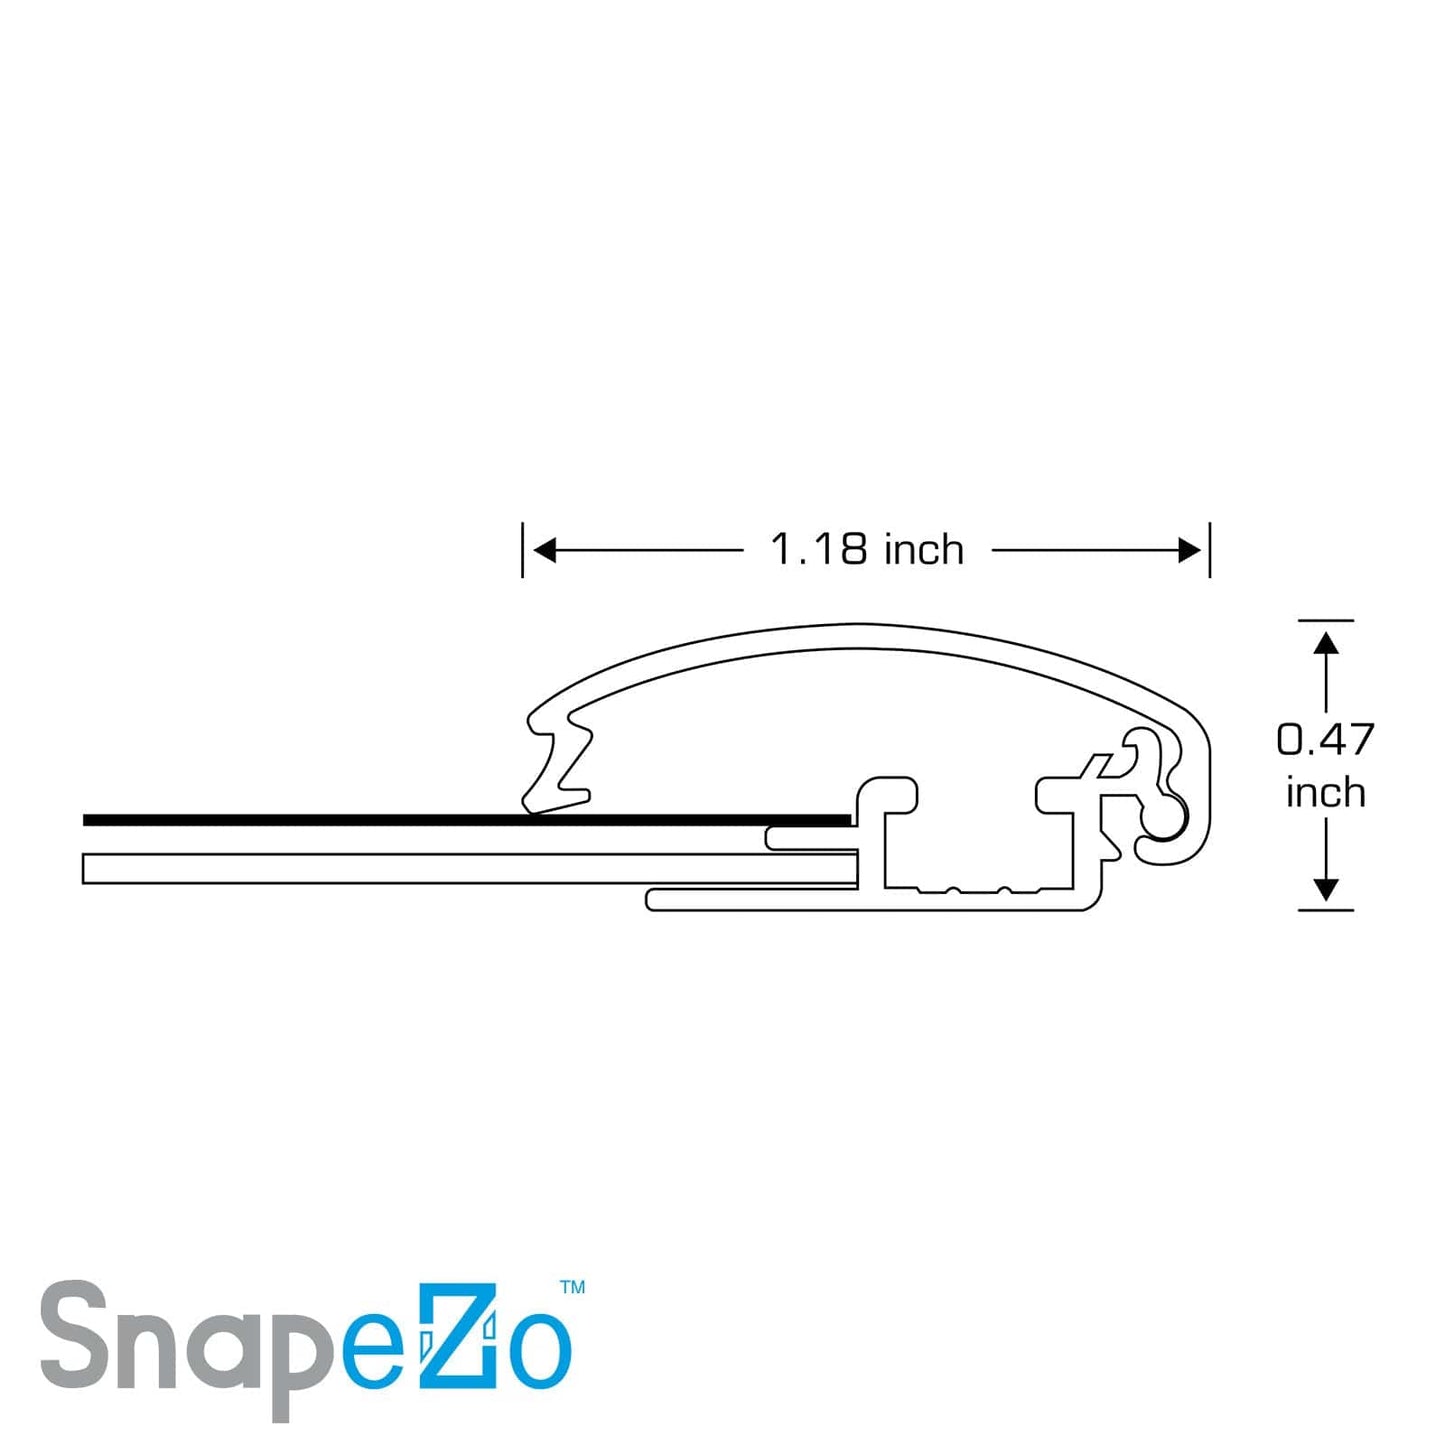 21x28 Silver SnapeZo® Snap Frame - 1.2" Profile - Snap Frames Direct